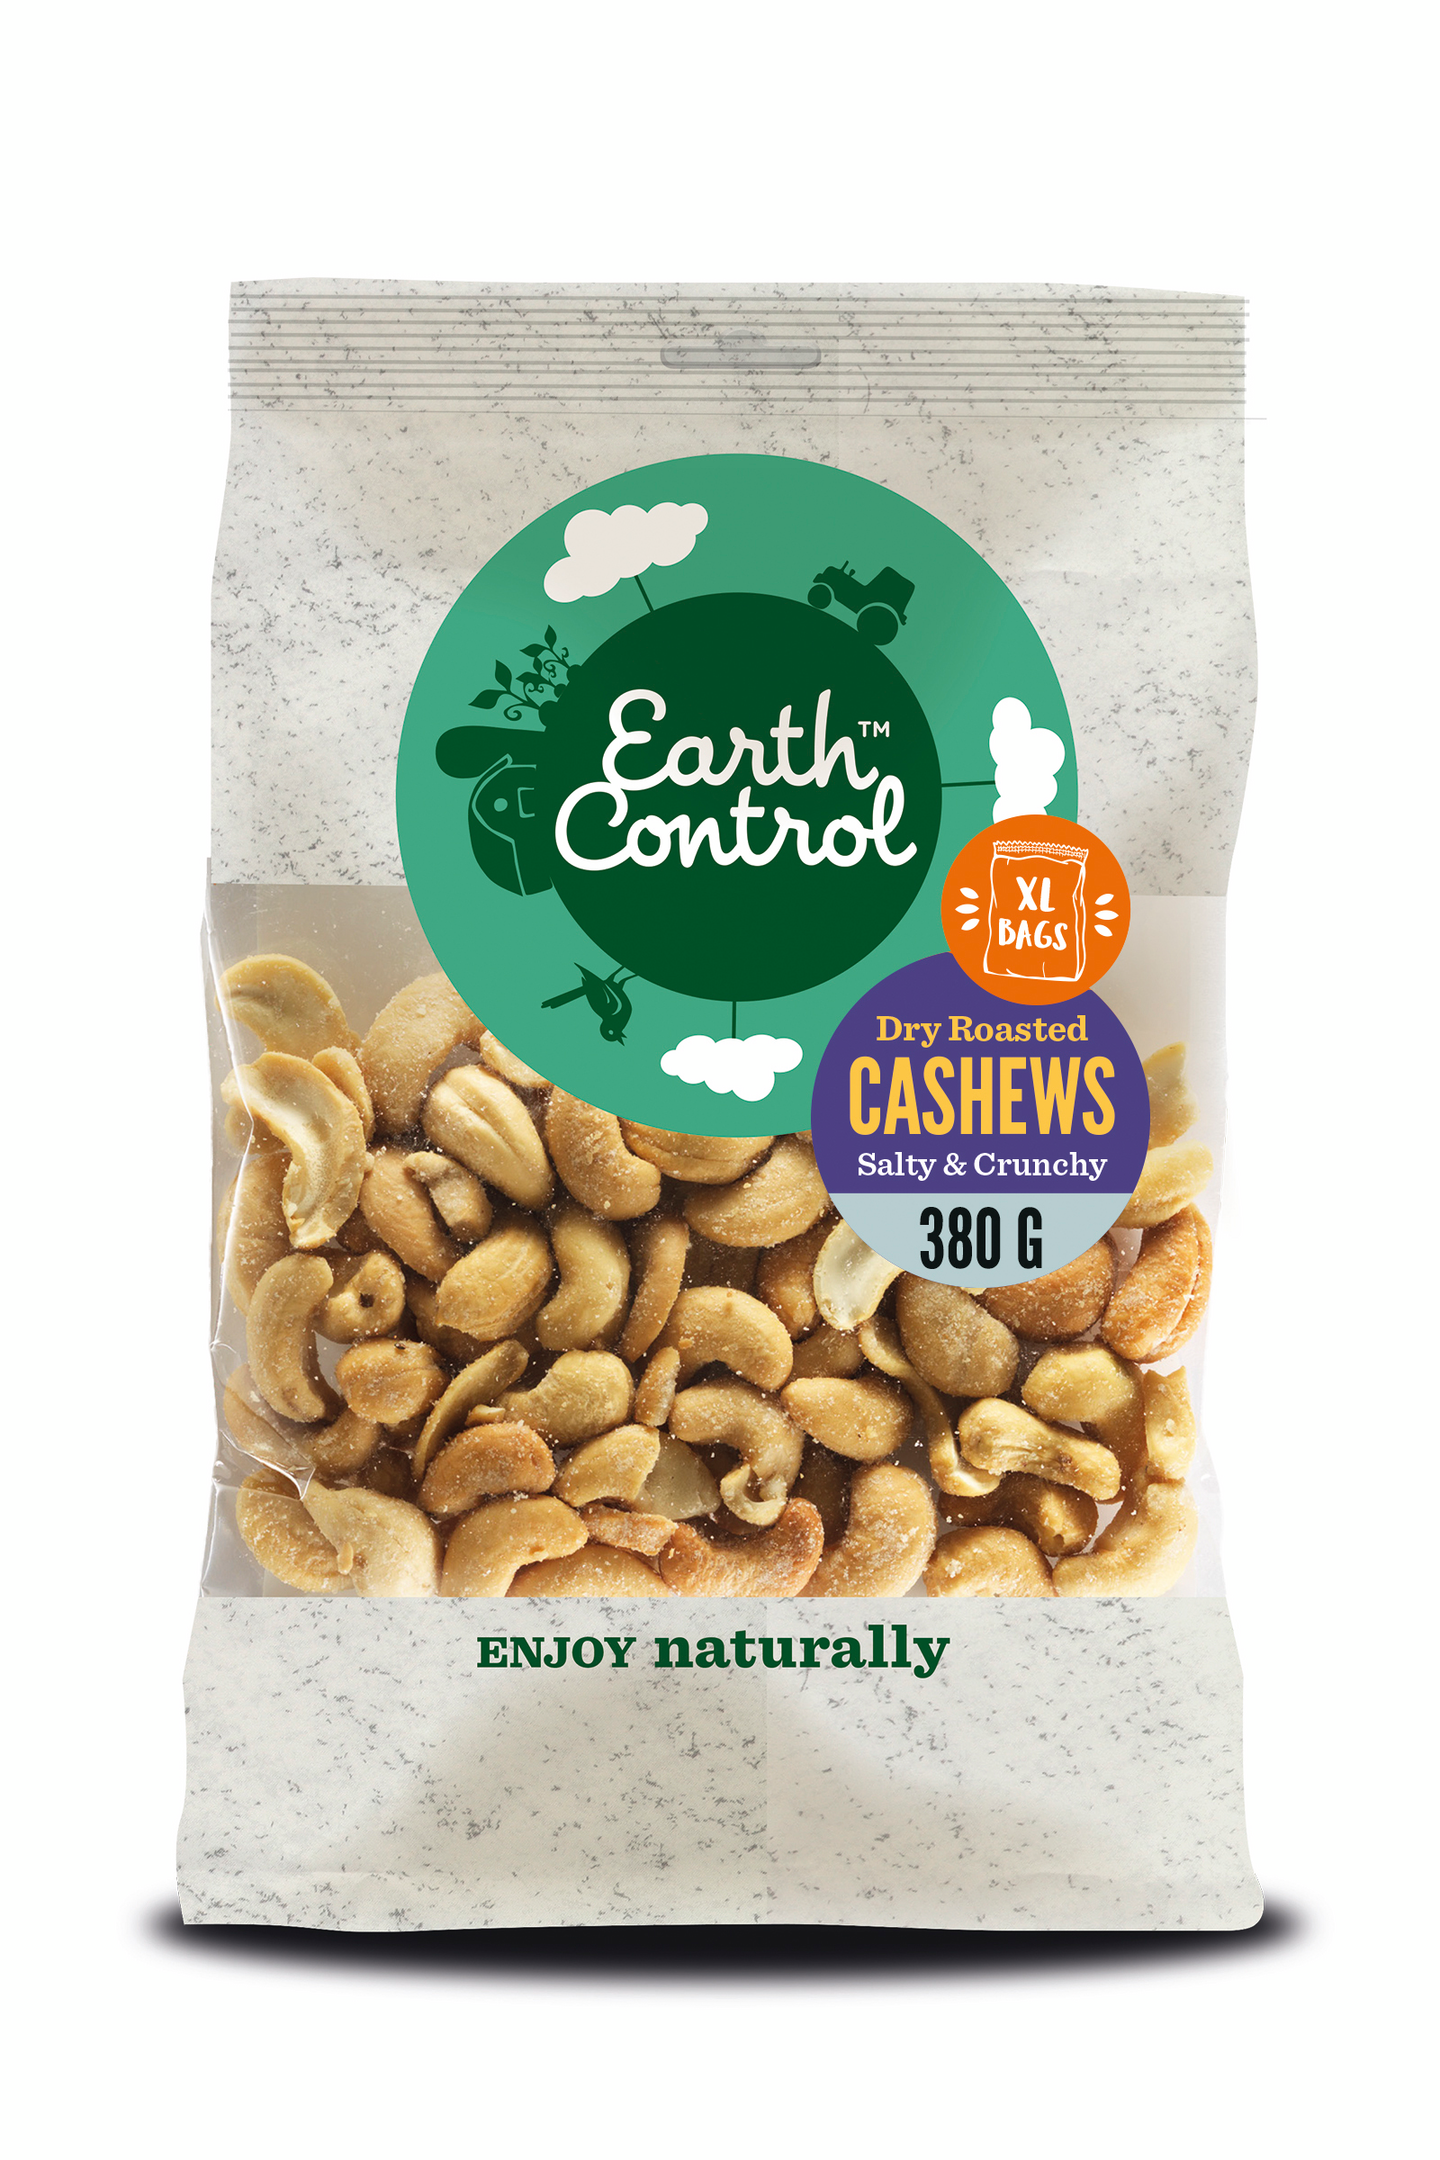 EC XL paahd-suolattu cashew 380g